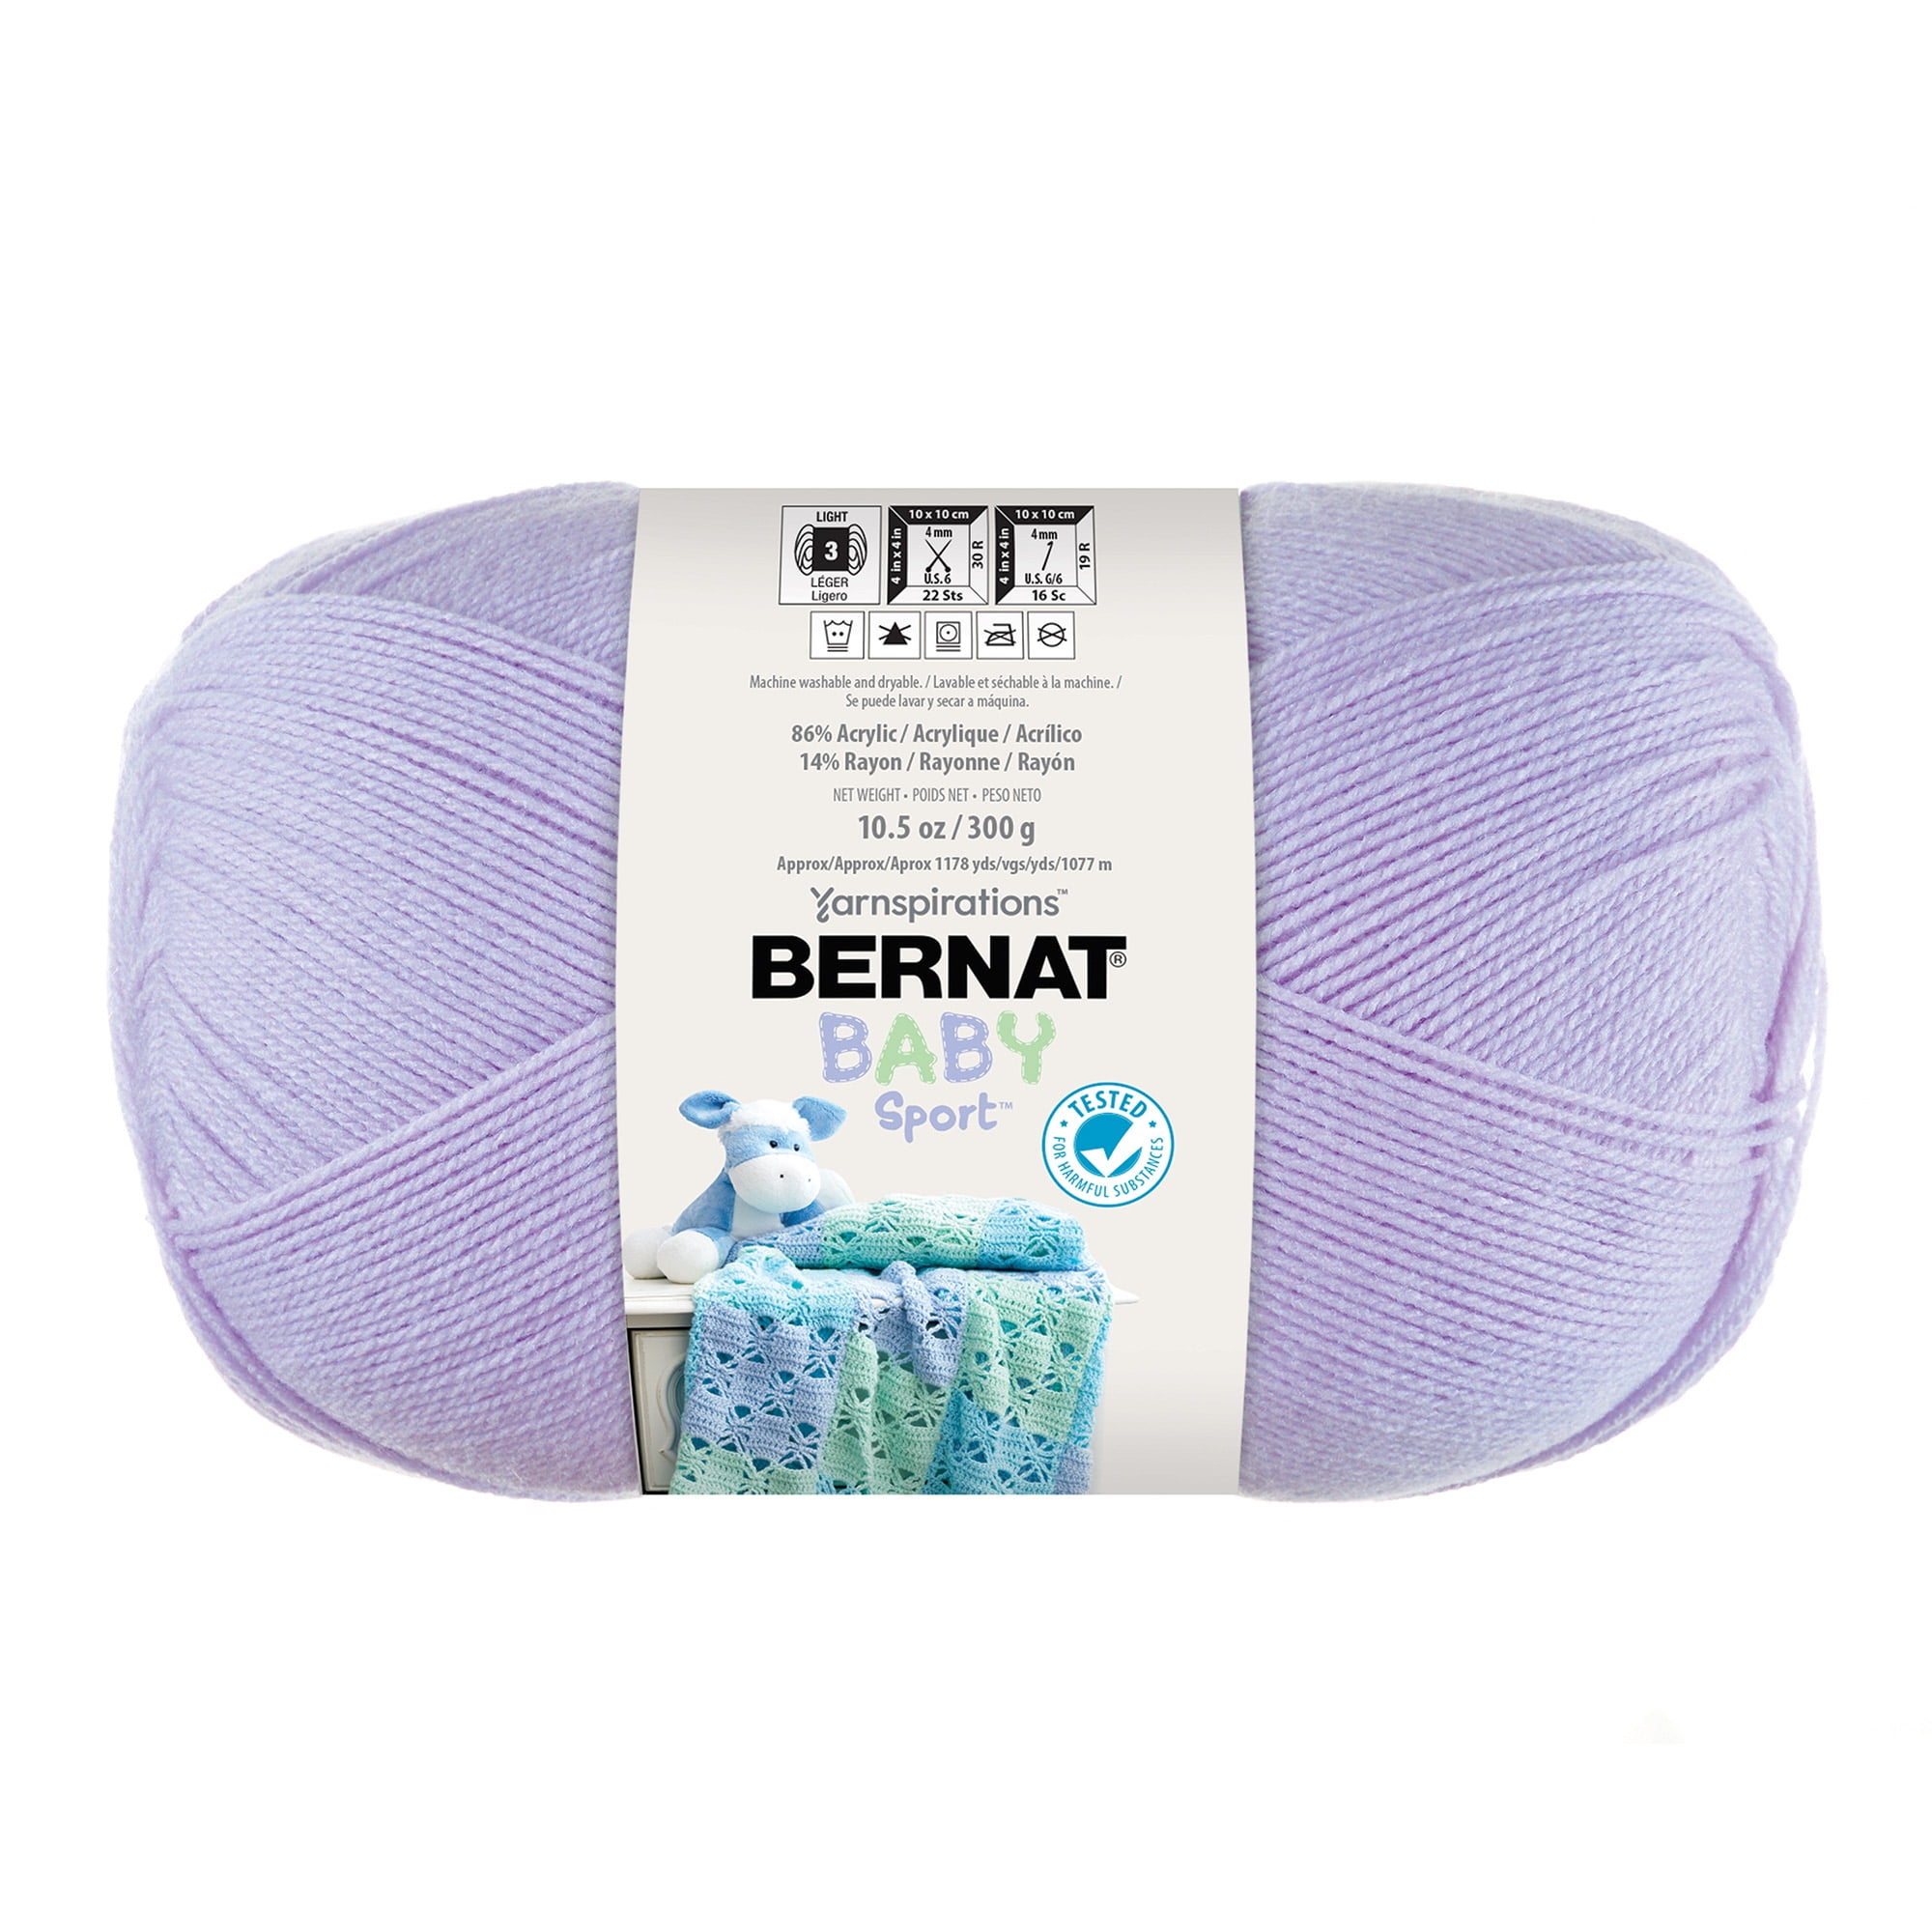 Bernat Baby Sport #3 Light Acrylic Yarn, Lavender 10.5oz/300g, 1077 Yards